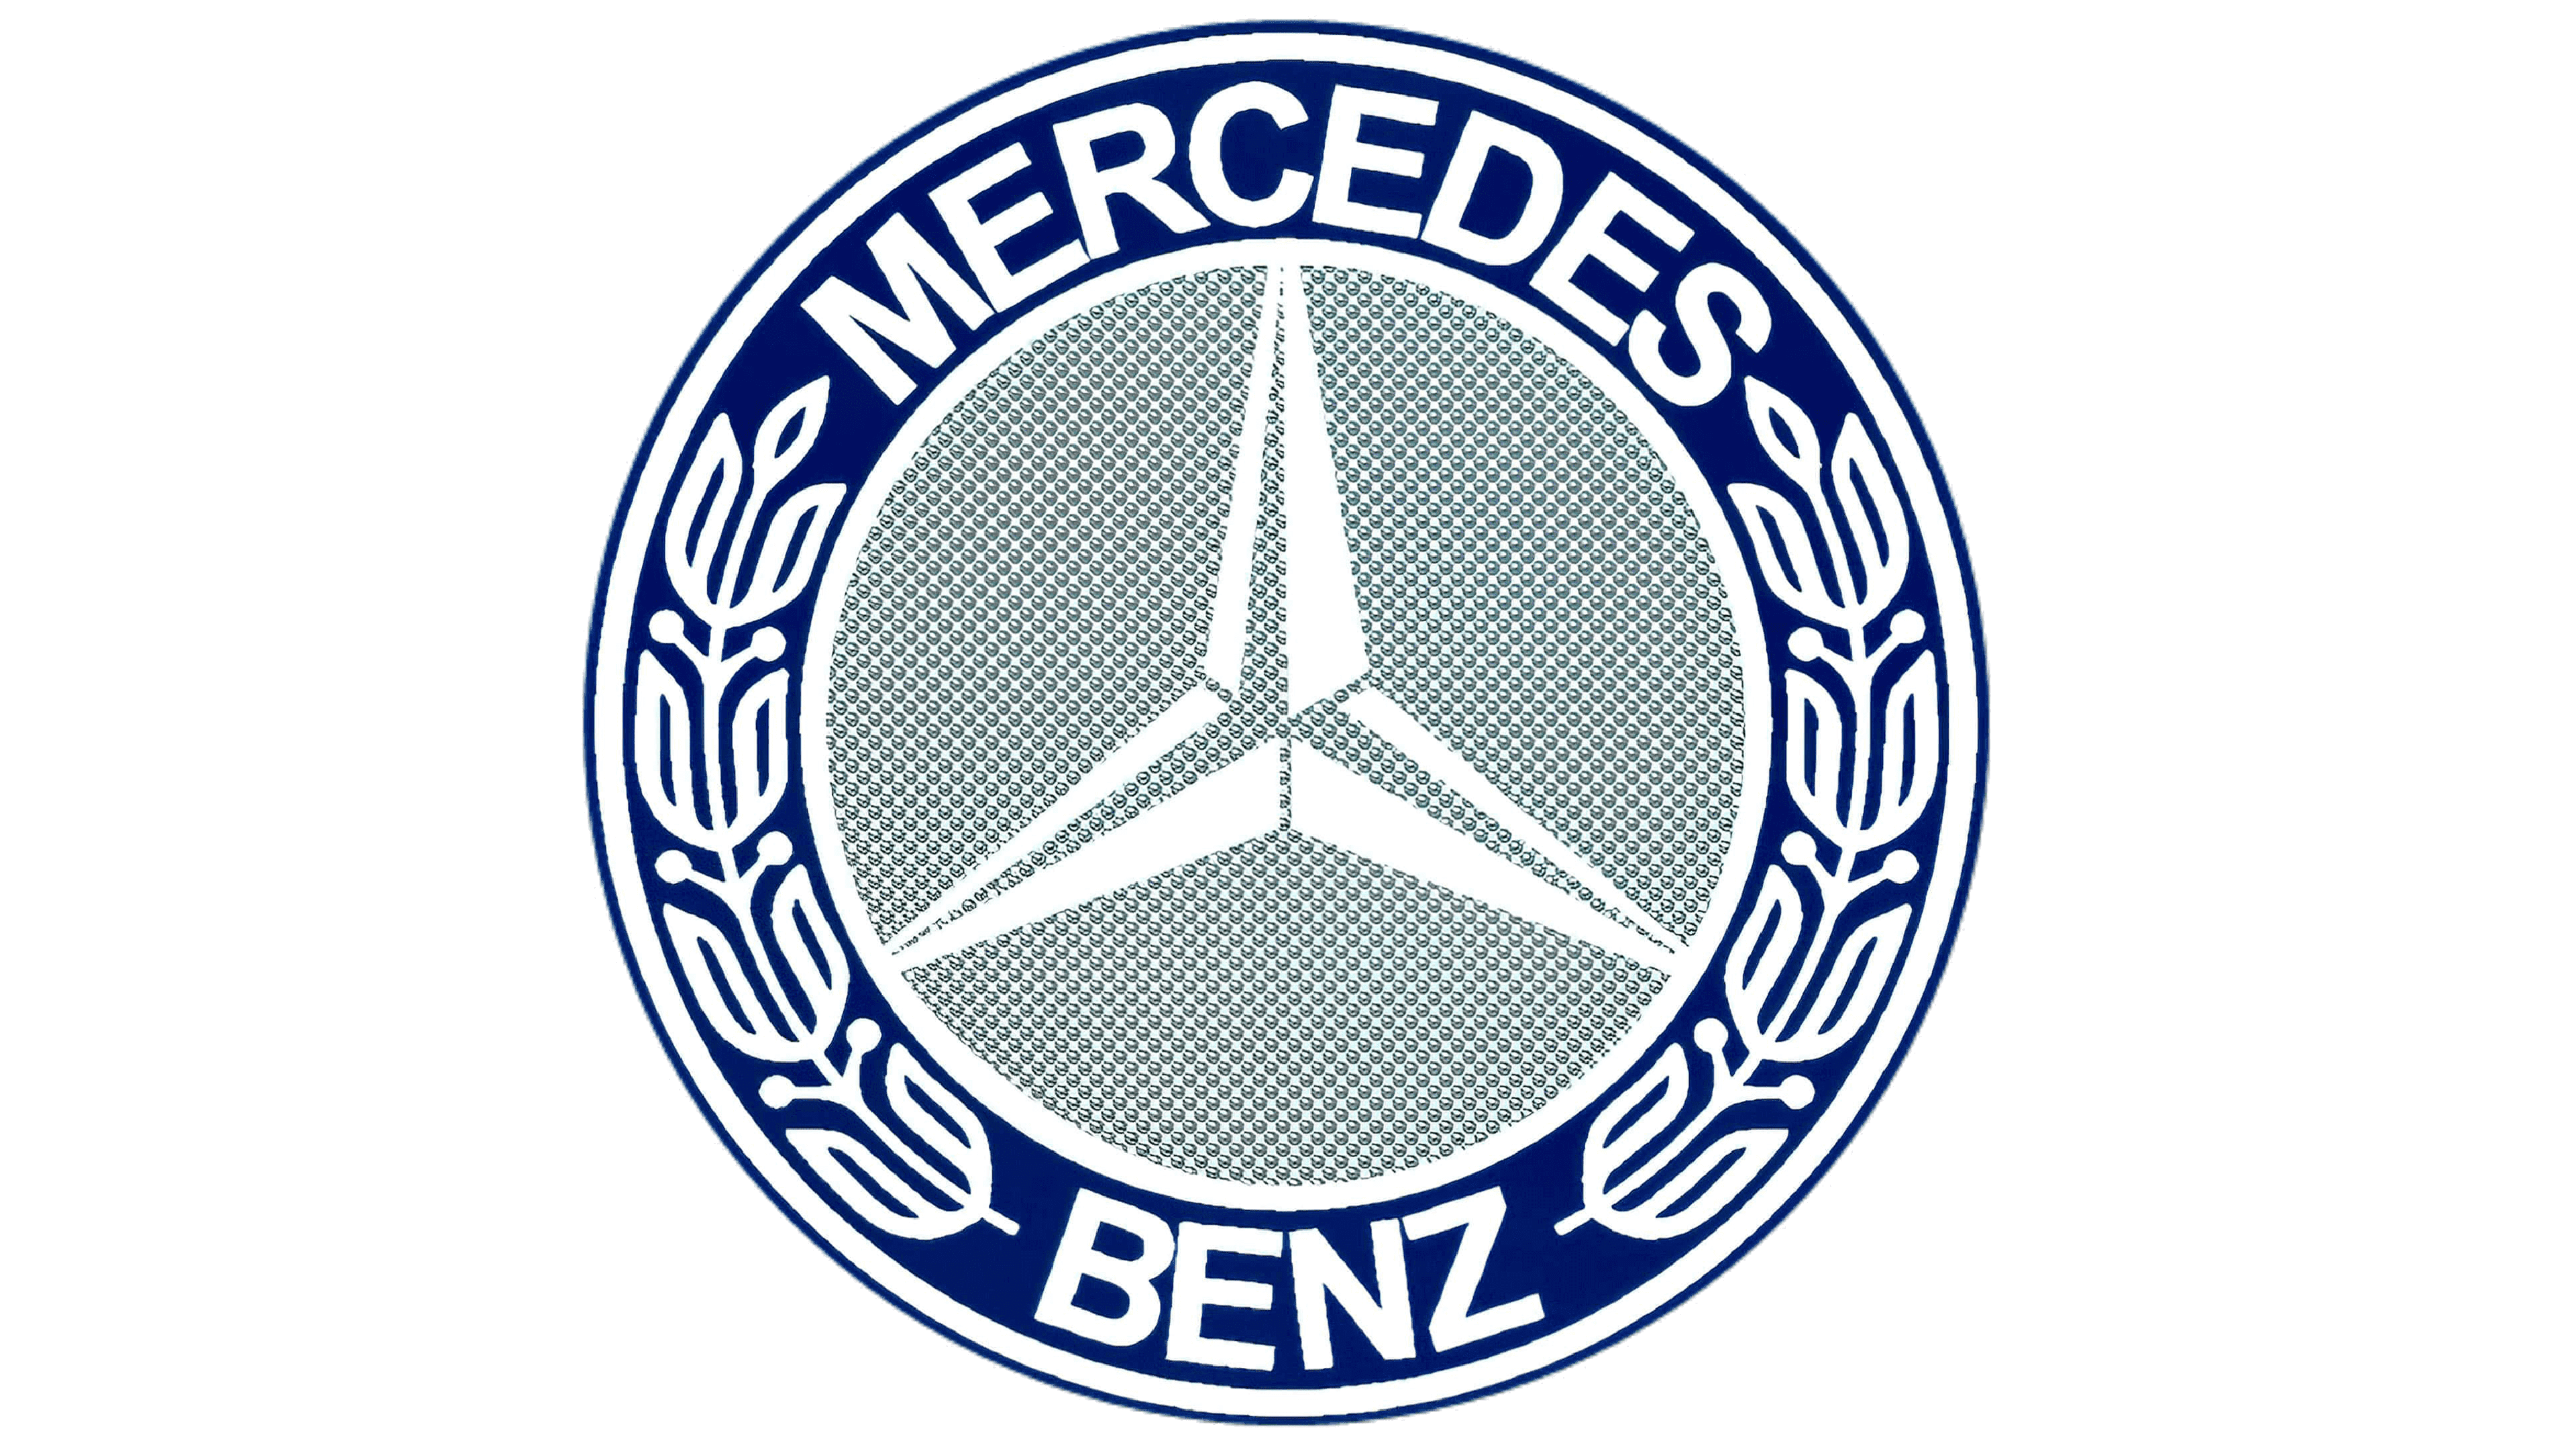 mercedes benz logo transparent background